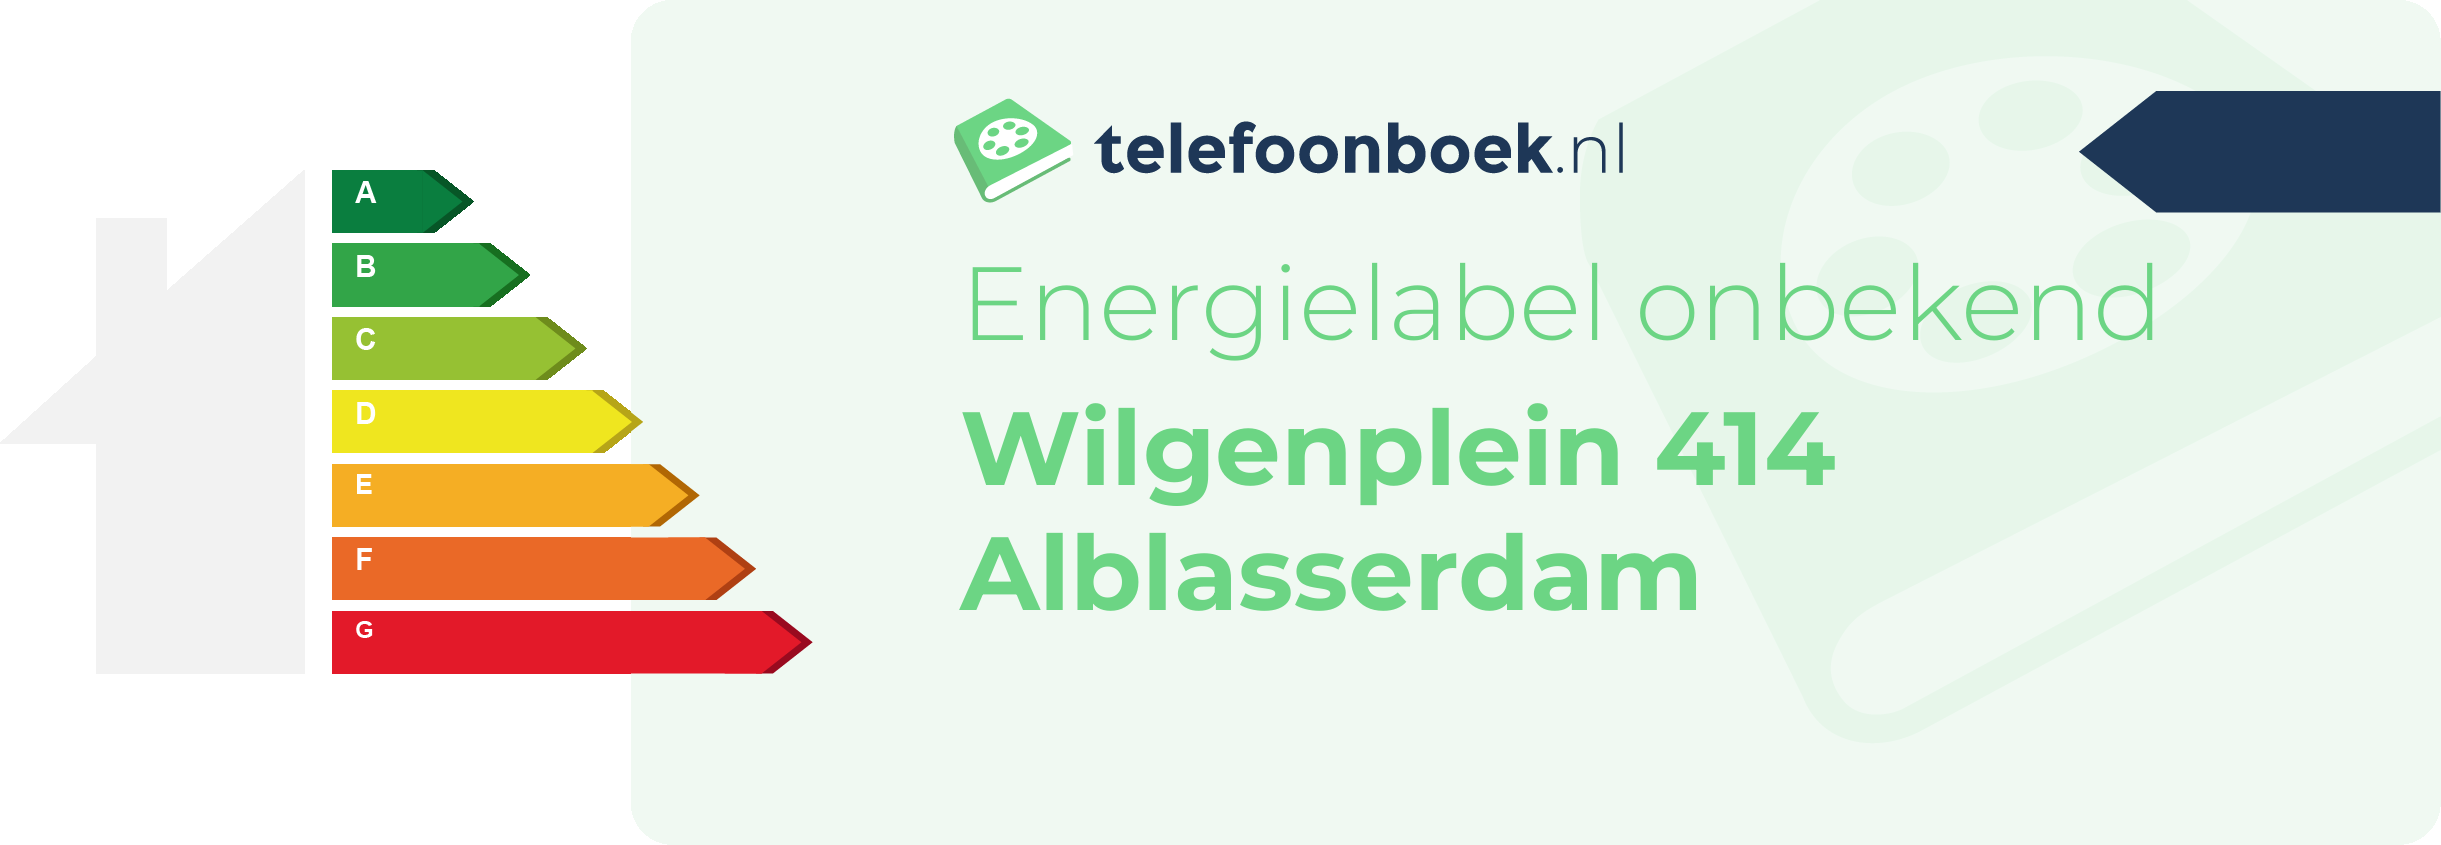 Energielabel Wilgenplein 414 Alblasserdam